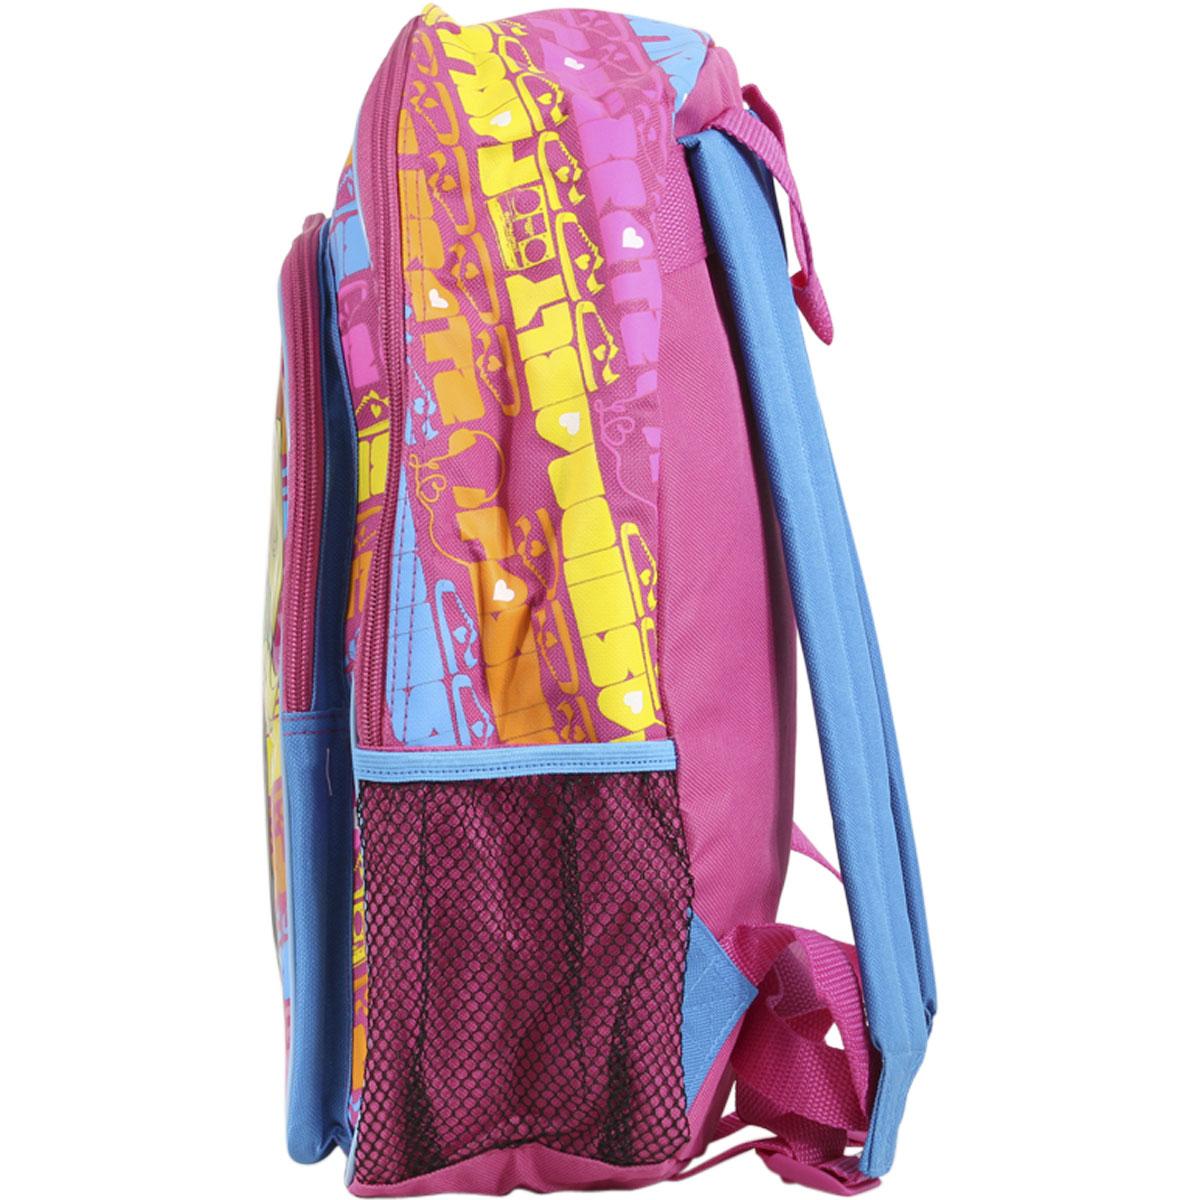 Shop Backpack - Bratz - Large Backpack - Pink – Luggage Factory